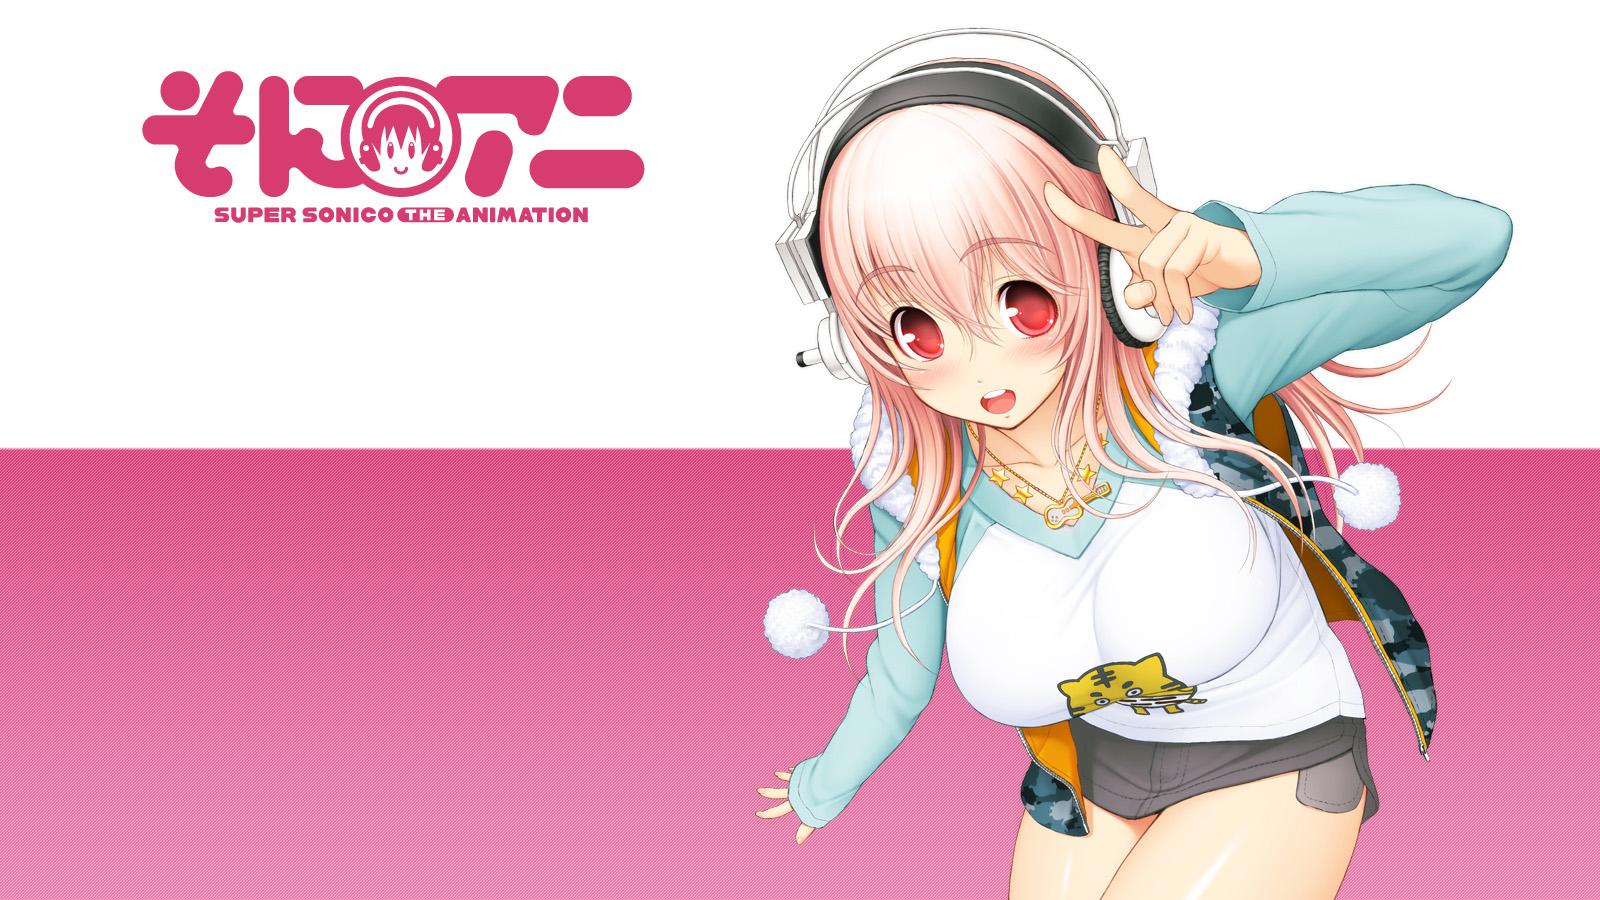 NekoPOP-Super-Sonico-Animation-announcement-2013-11-04.jpg